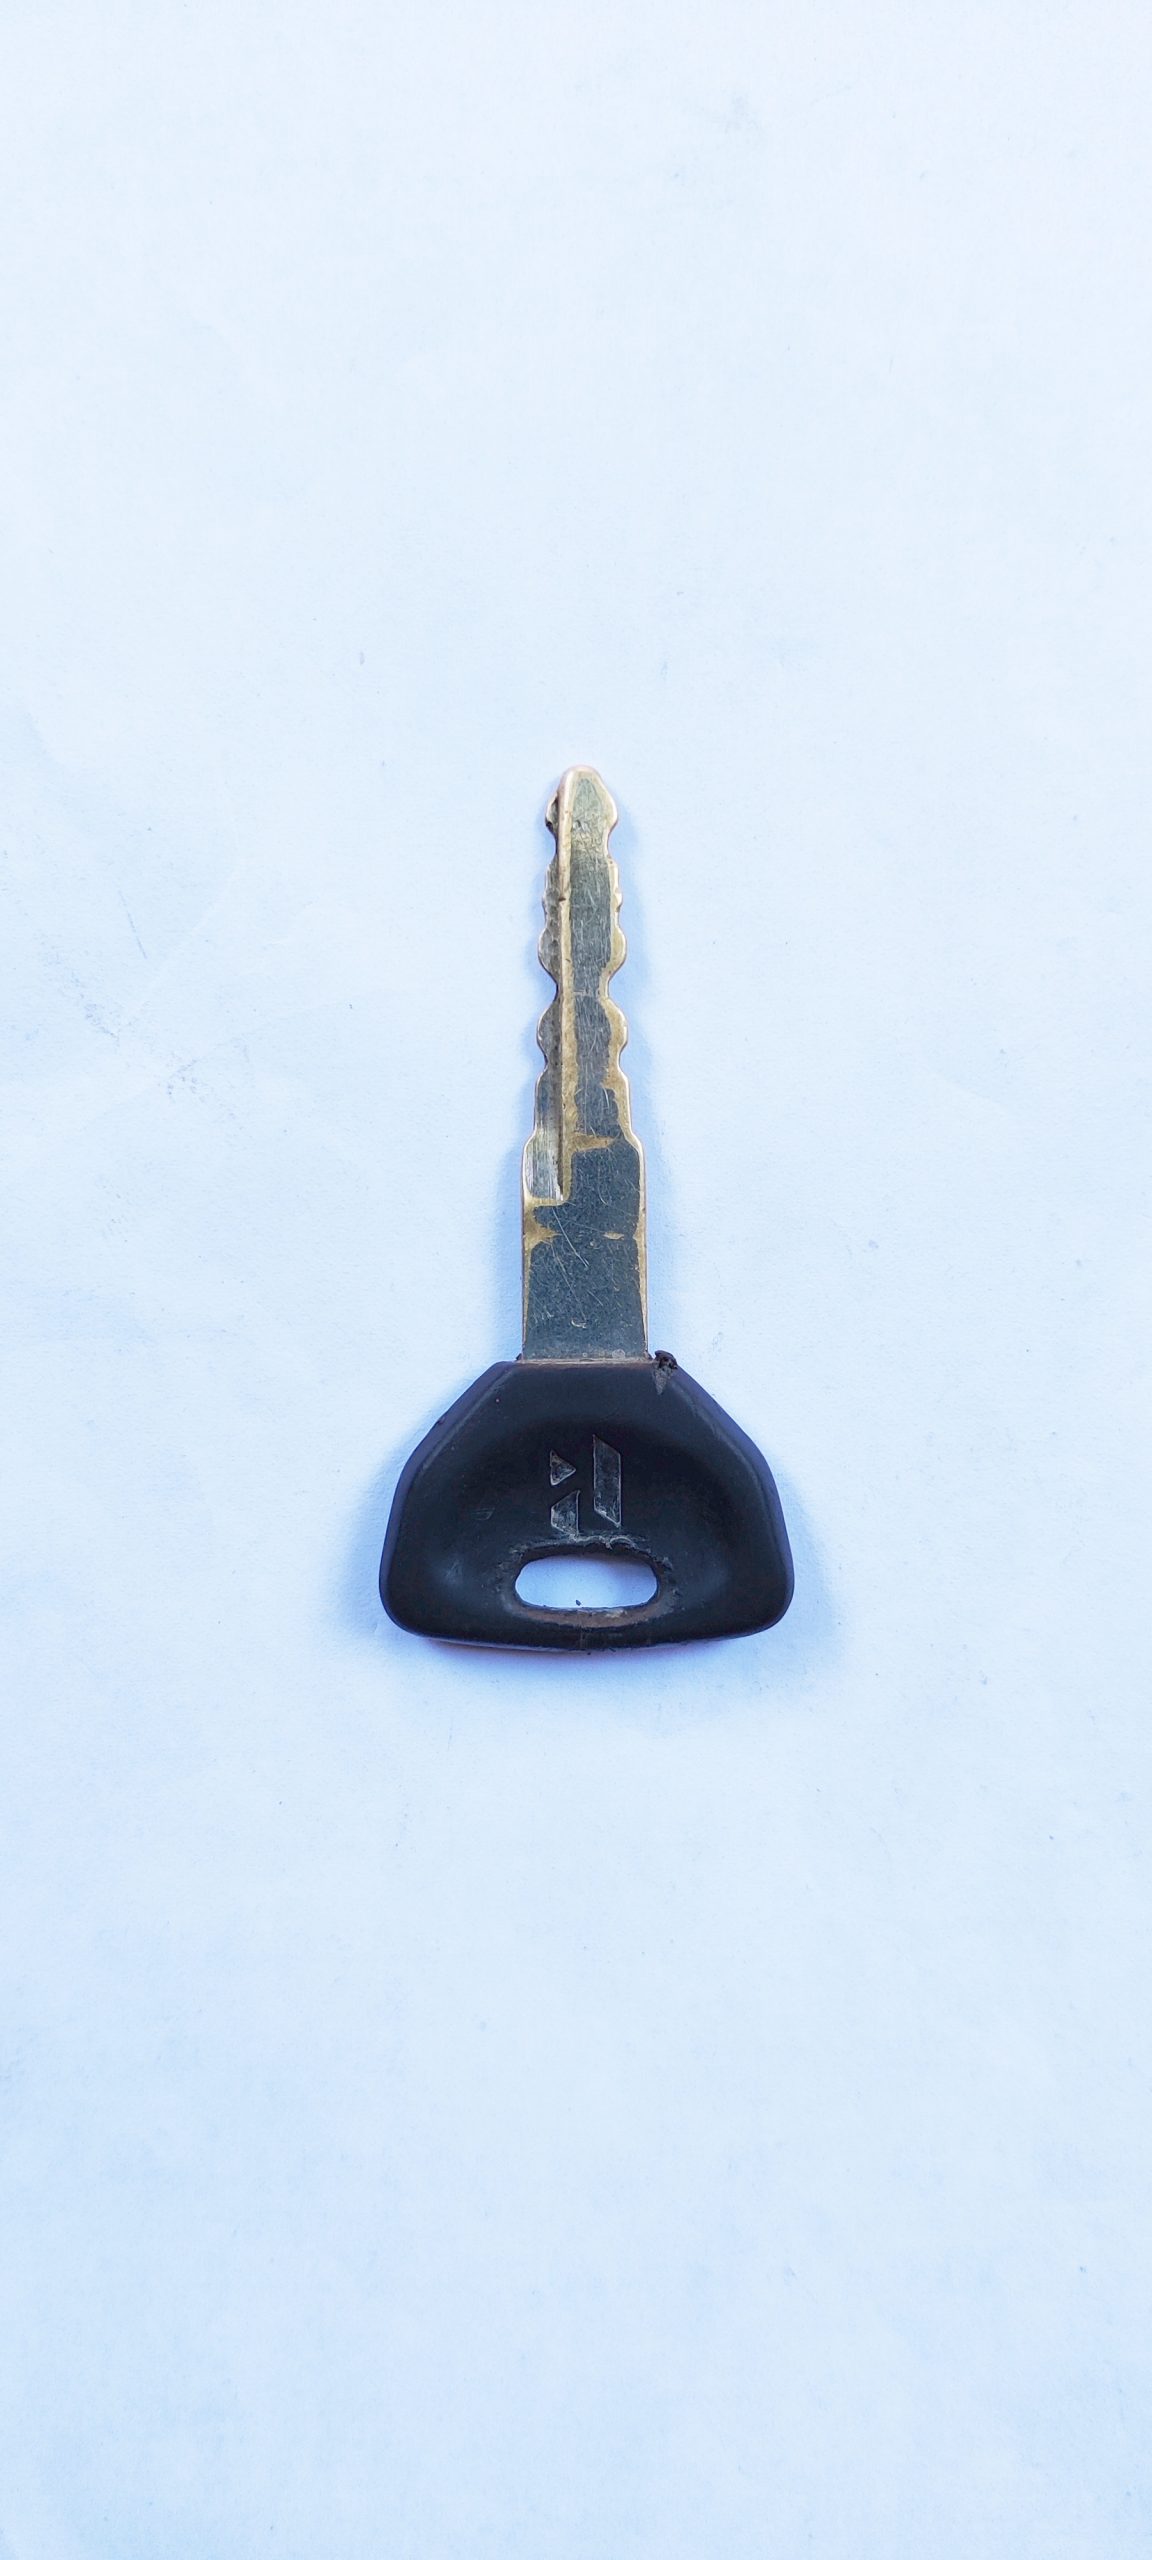 A bike key